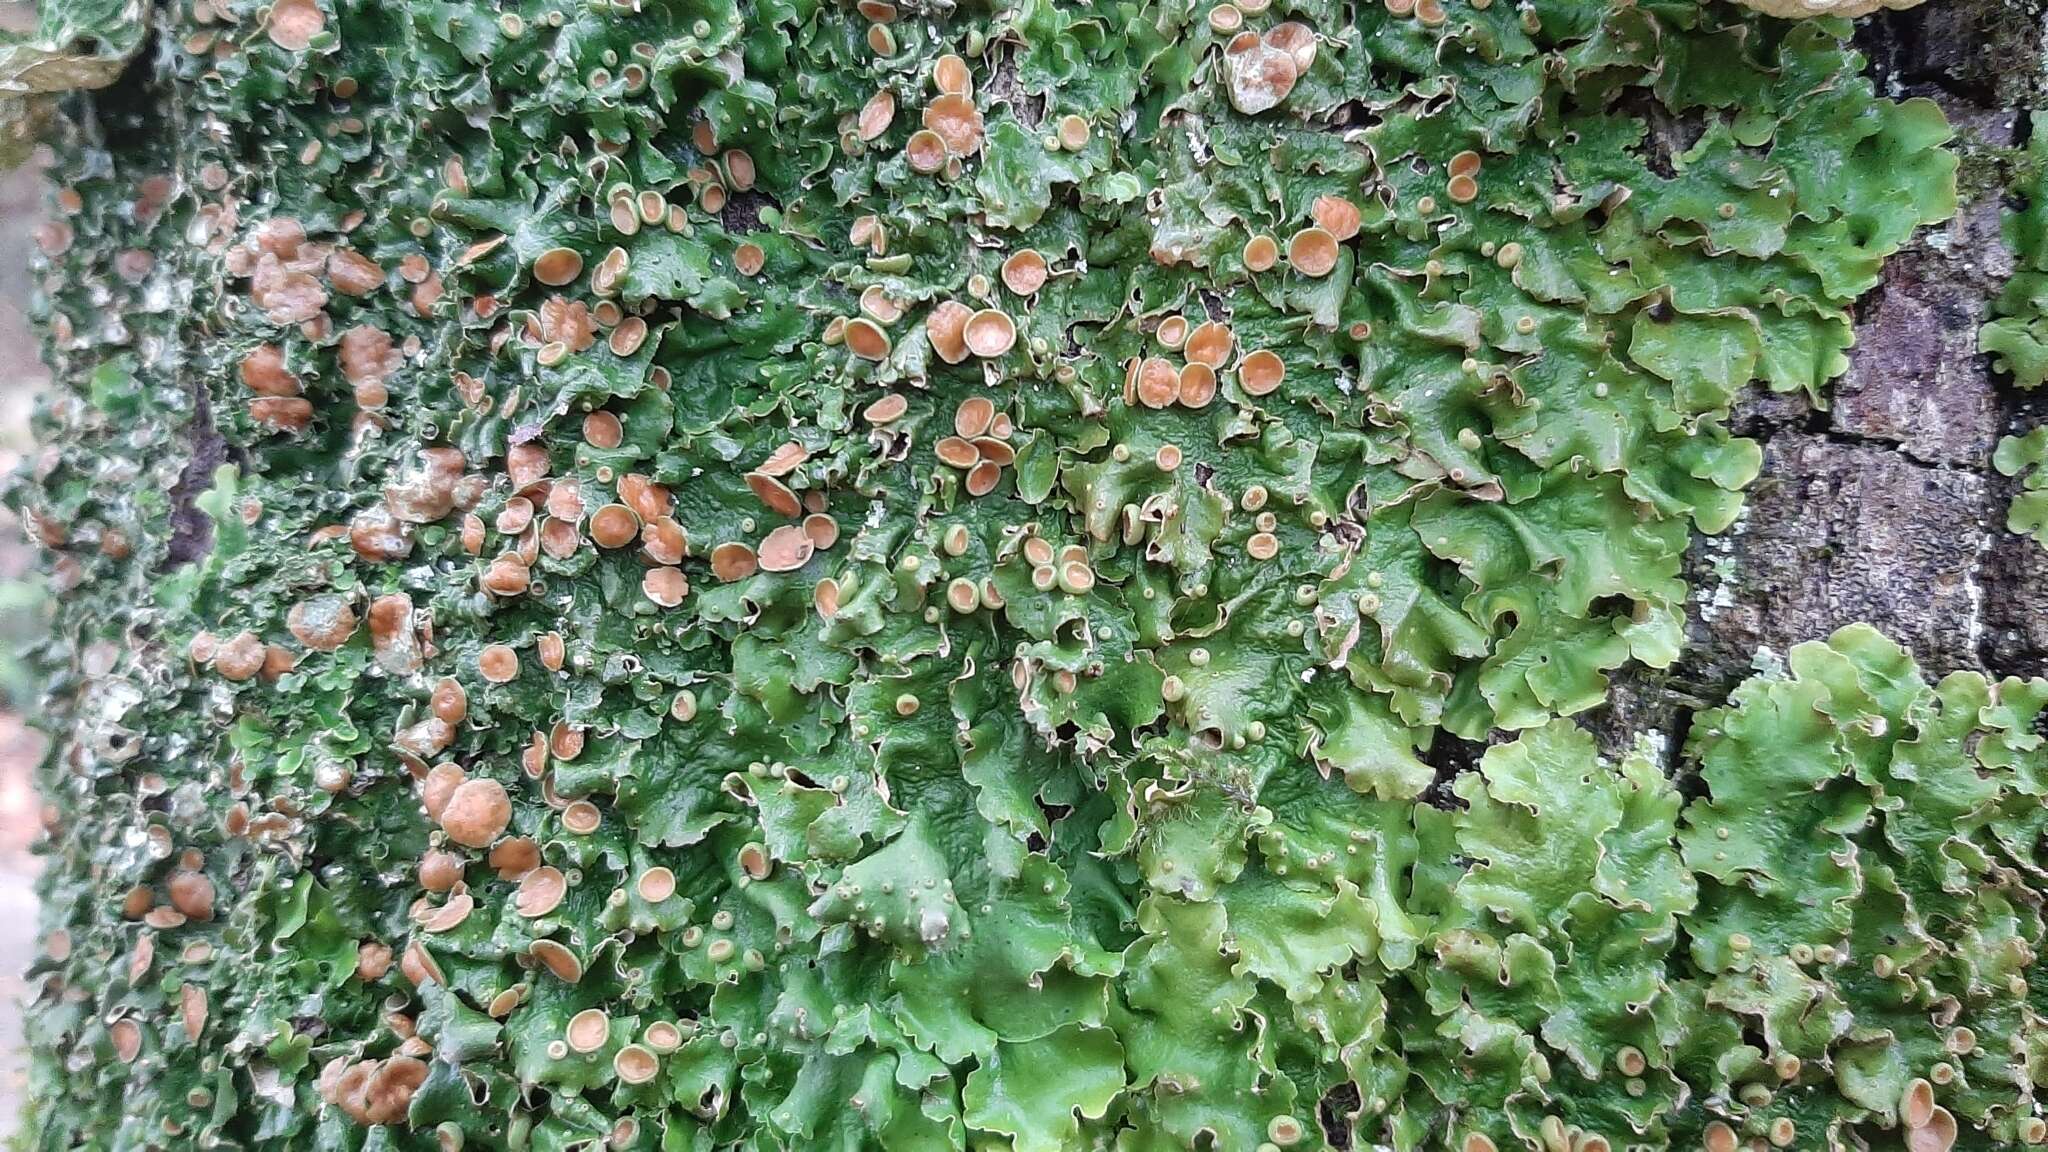 Image of <i>Ricasolia virens</i>